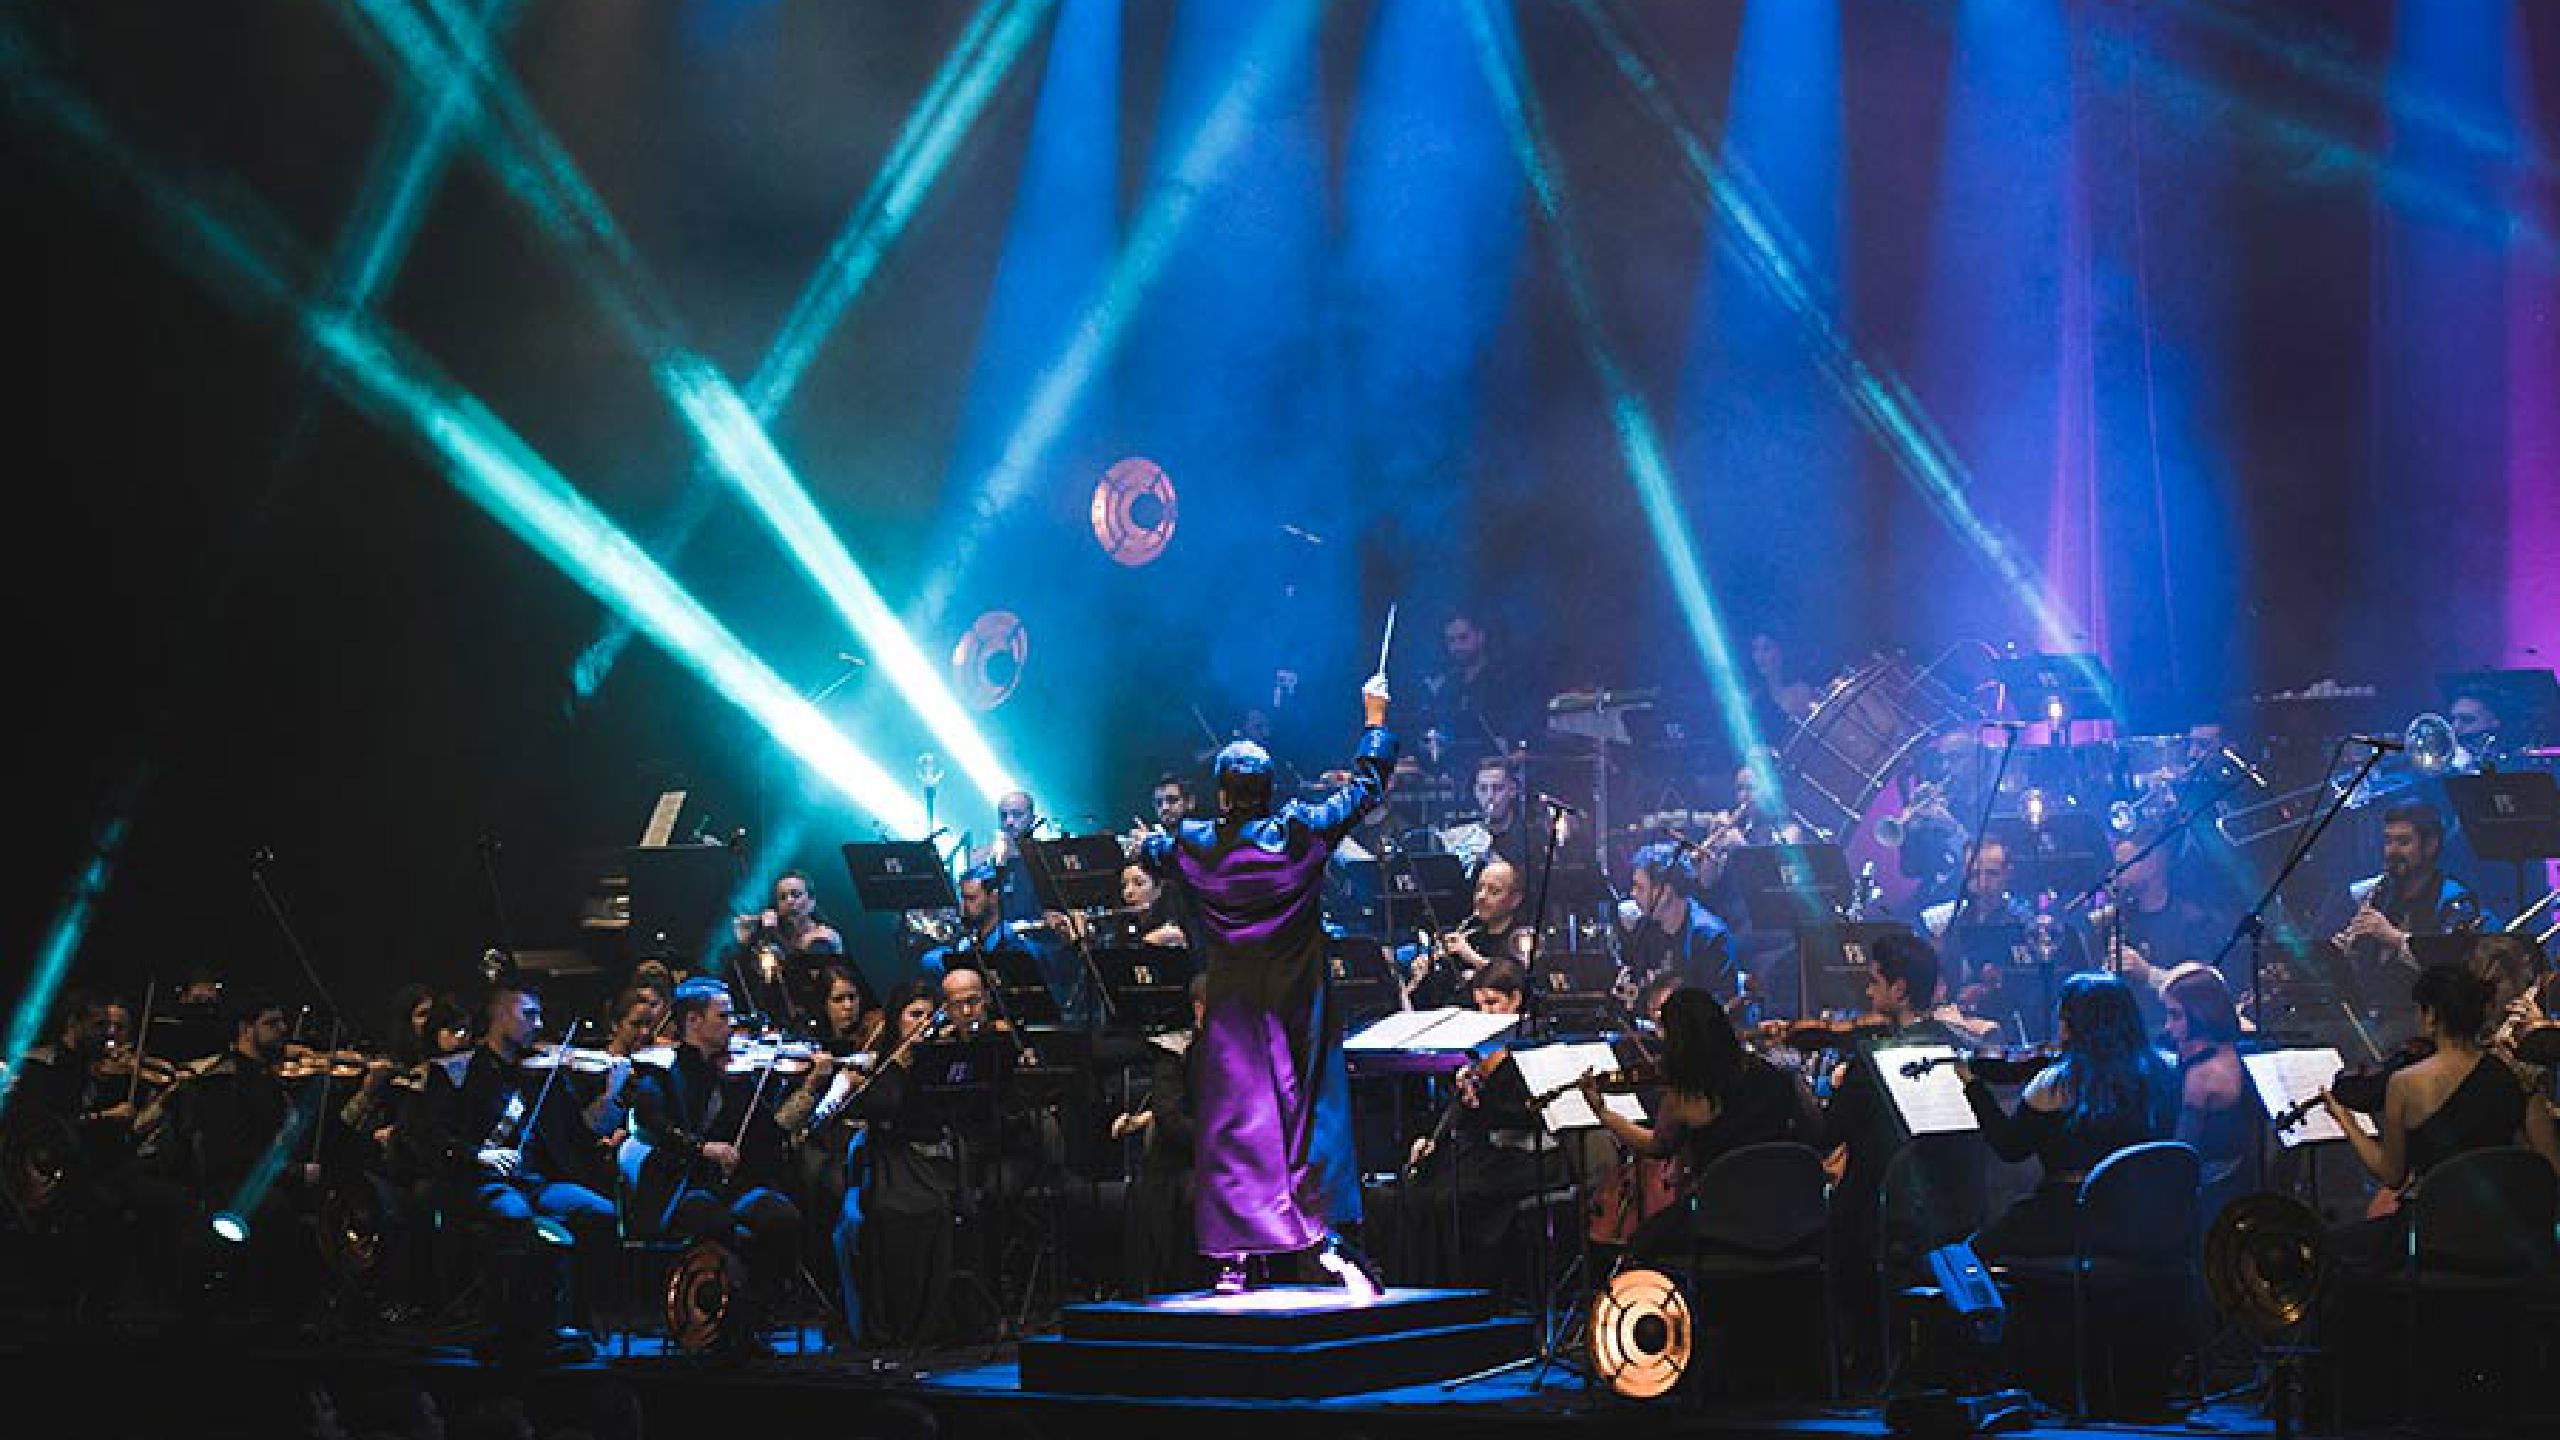 film symphony orchestra tour 2022